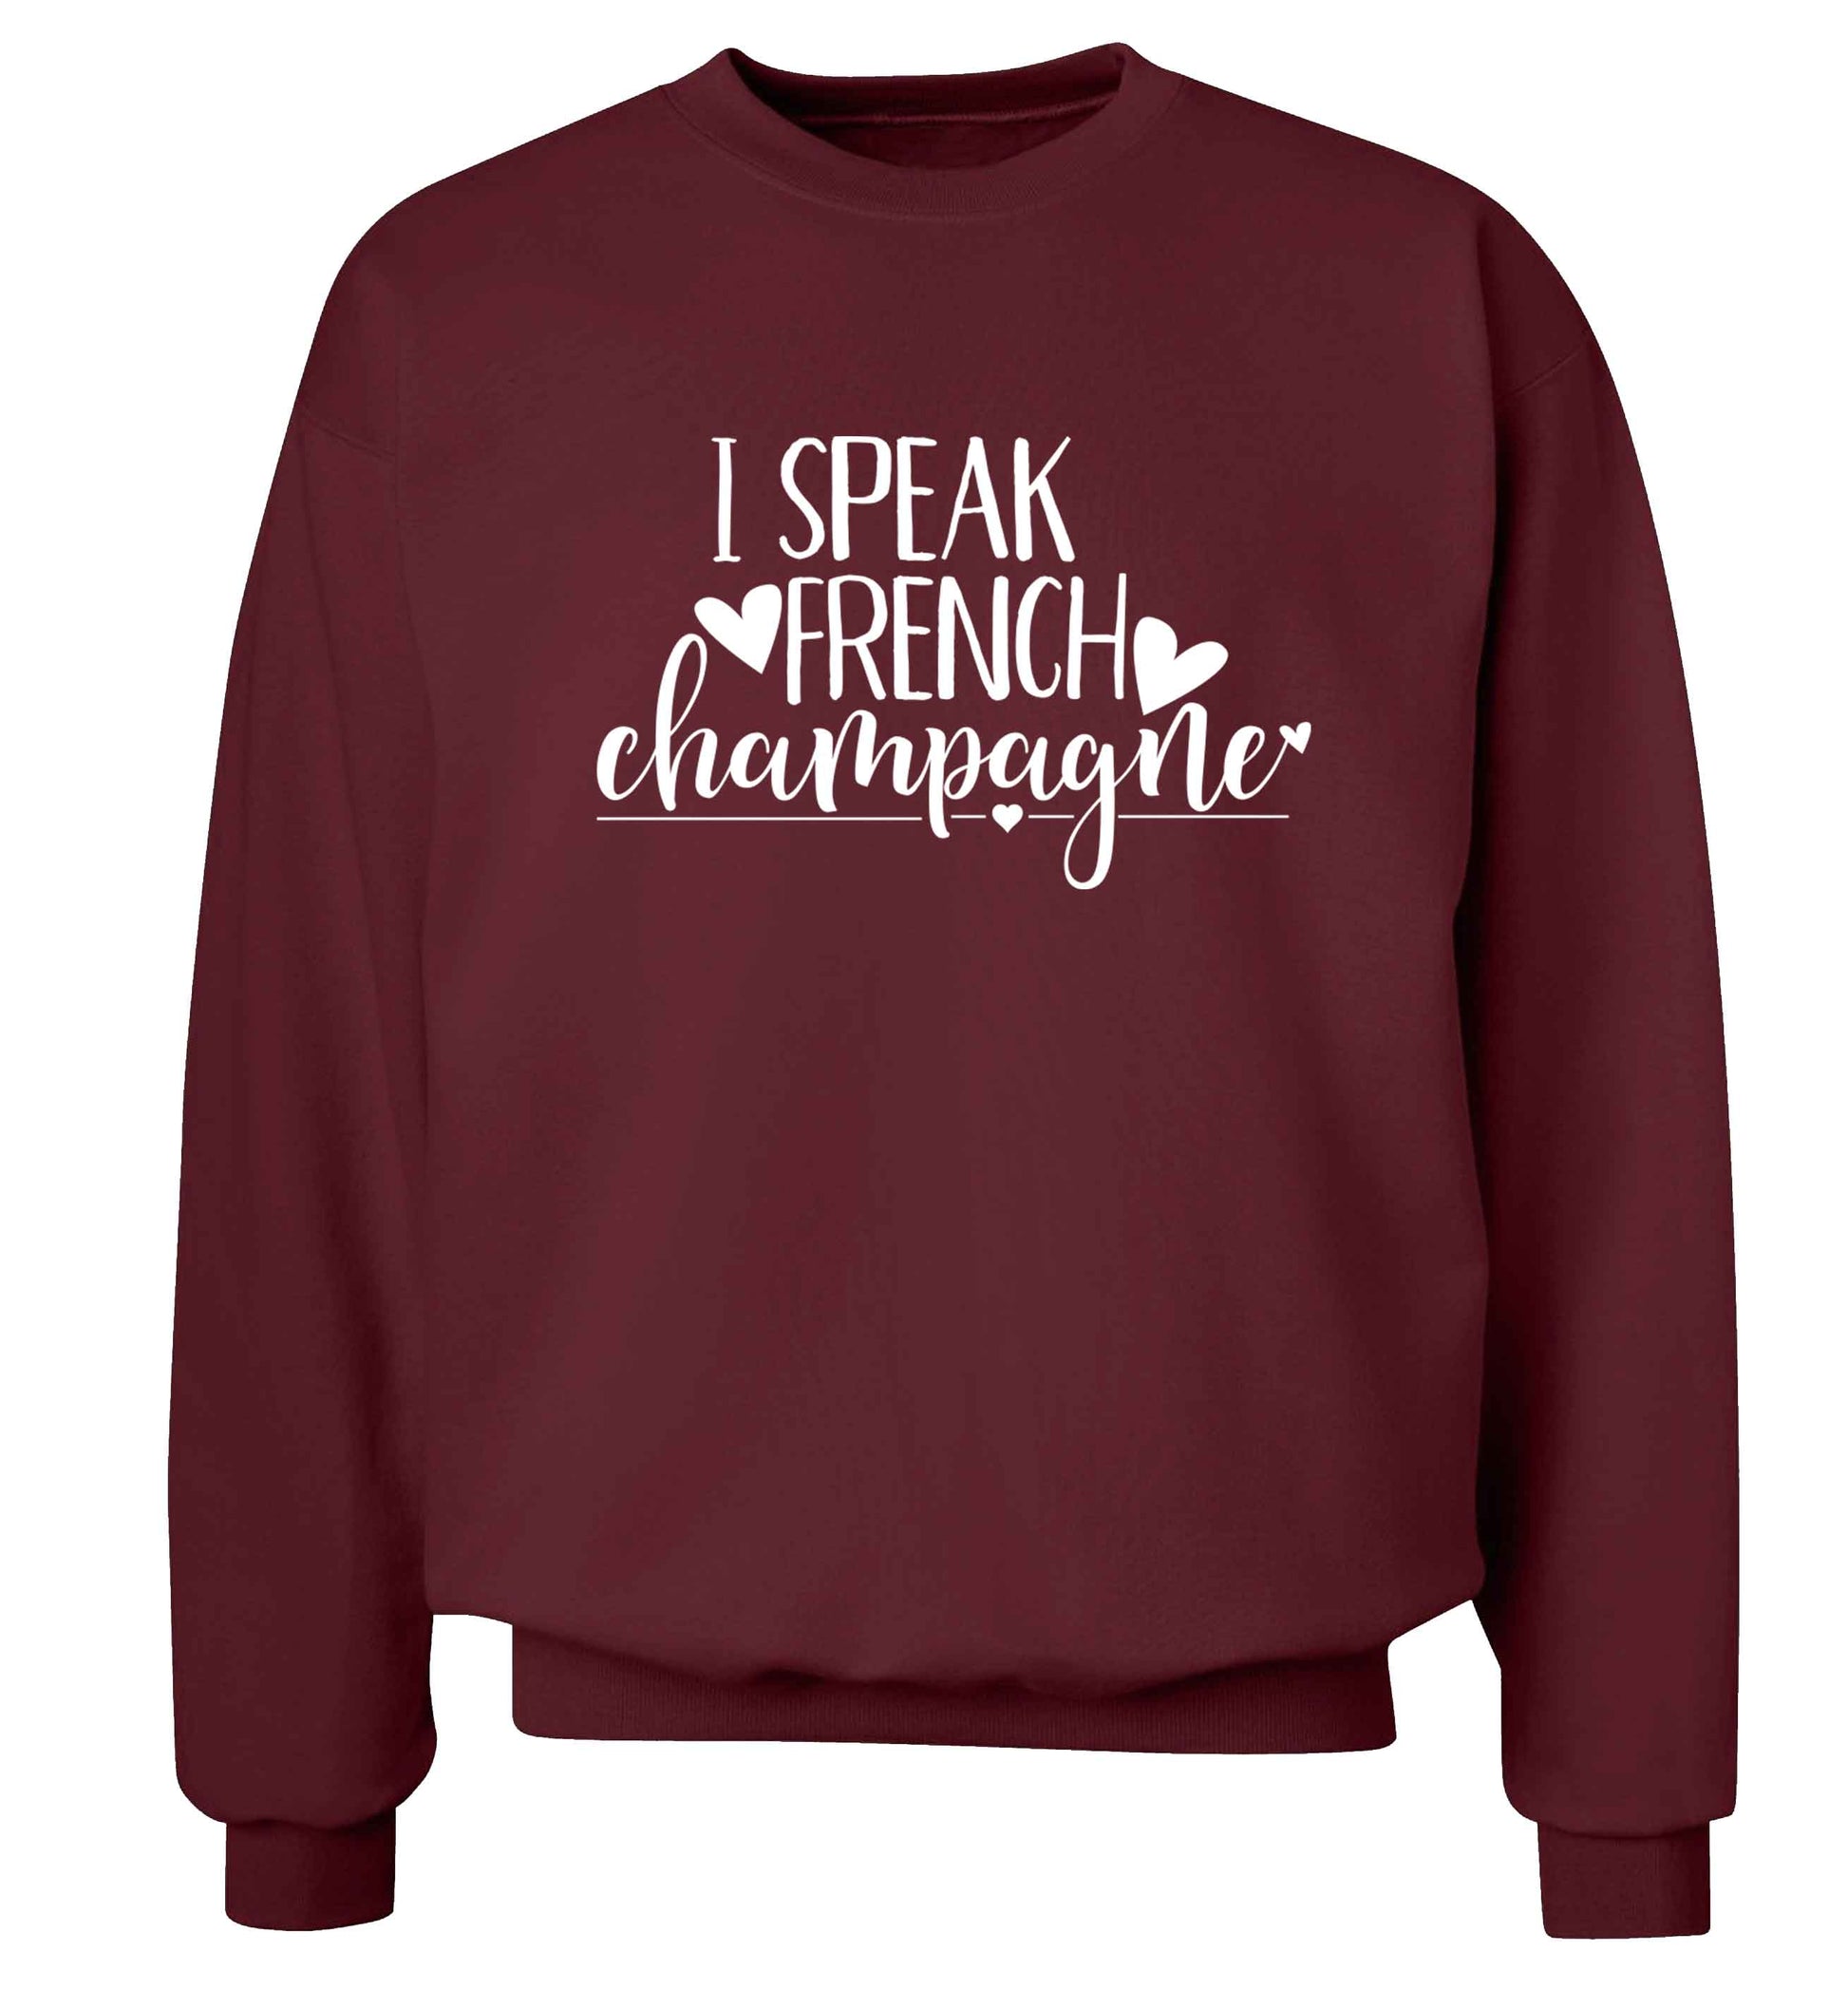 I speak french champagne Adult's unisex maroon Sweater 2XL